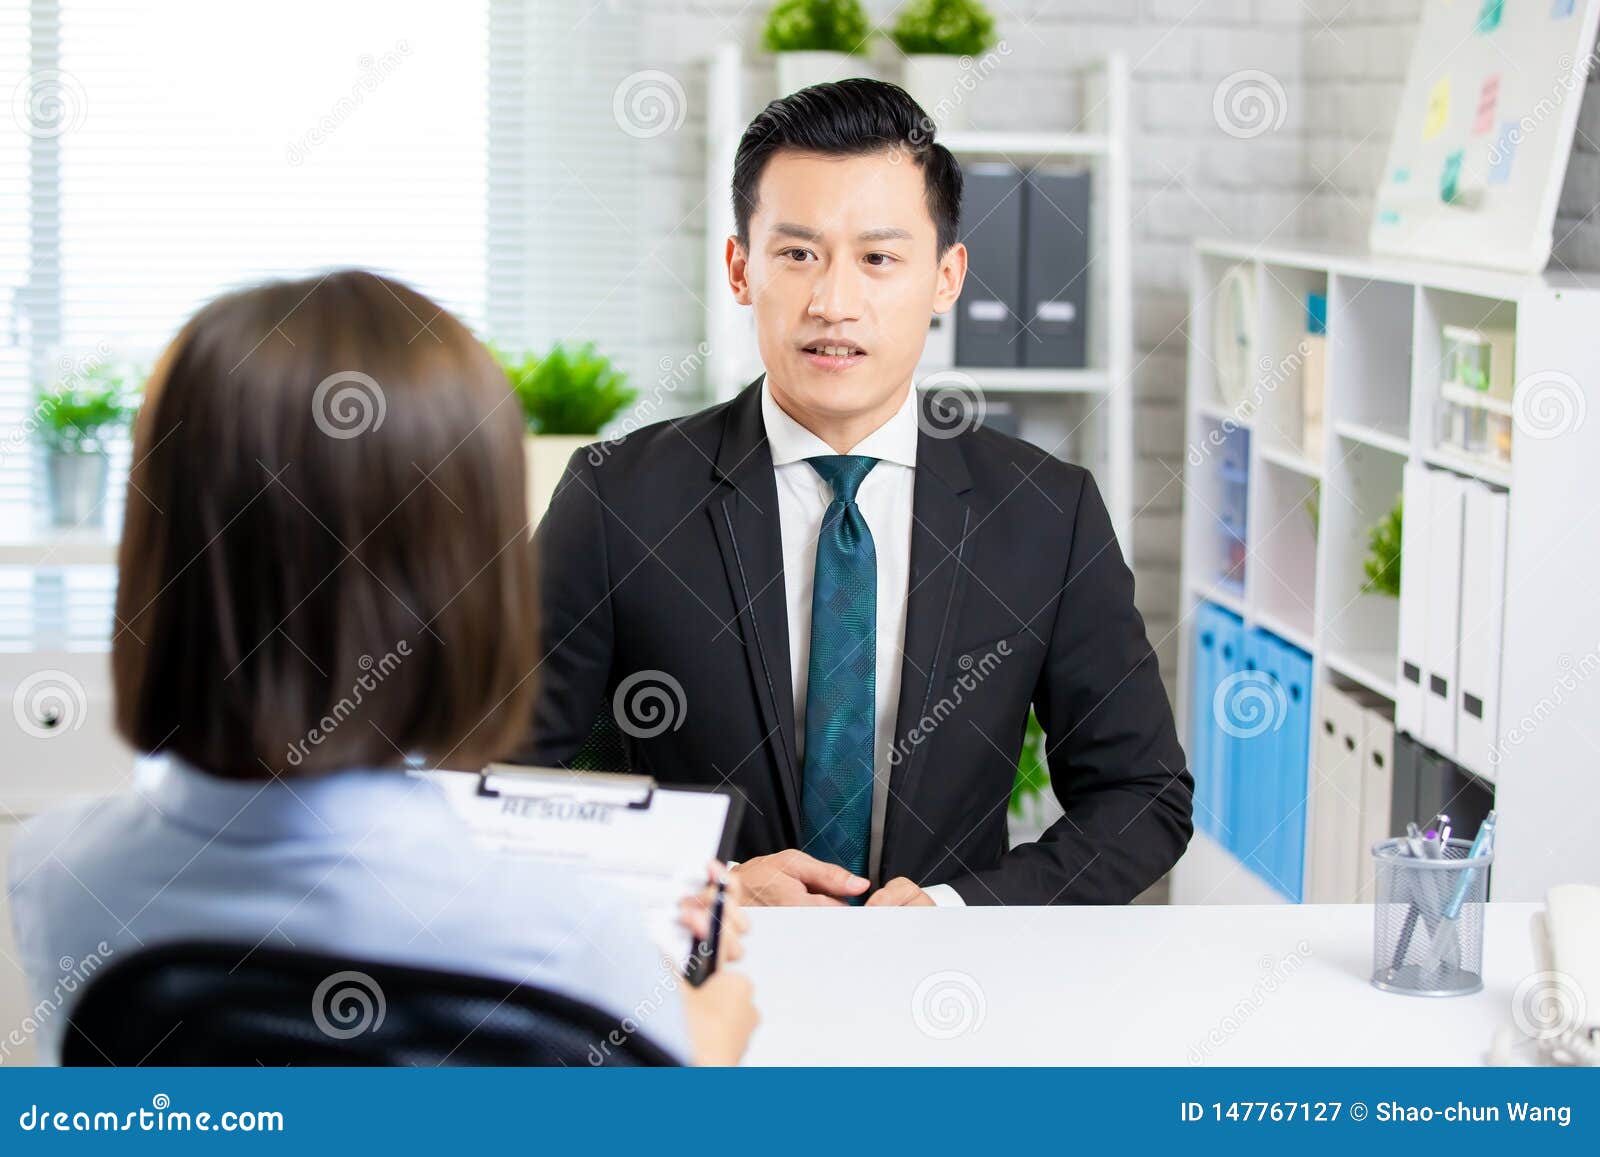 asian man in job interview